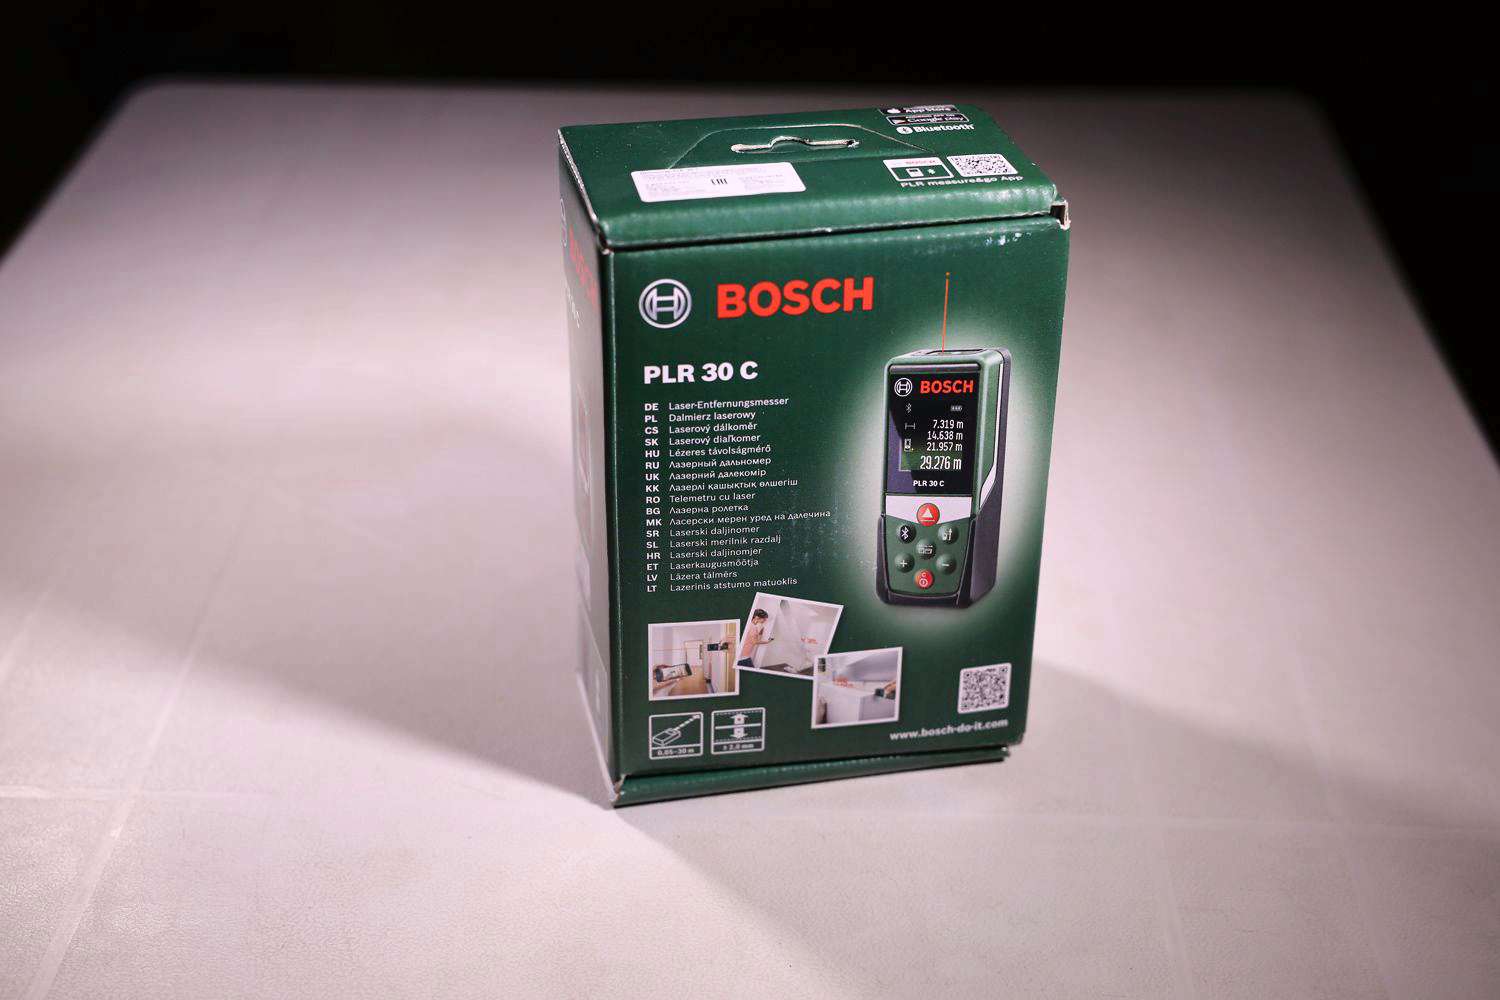 Bosch 50 c. Bosch лазерный PLR 30. Дальномер бош PLR 30 C. Лазерный дальномер Bosch Universal distance 50. Дальномер PLR 30c Bosch 0 603 672 120.